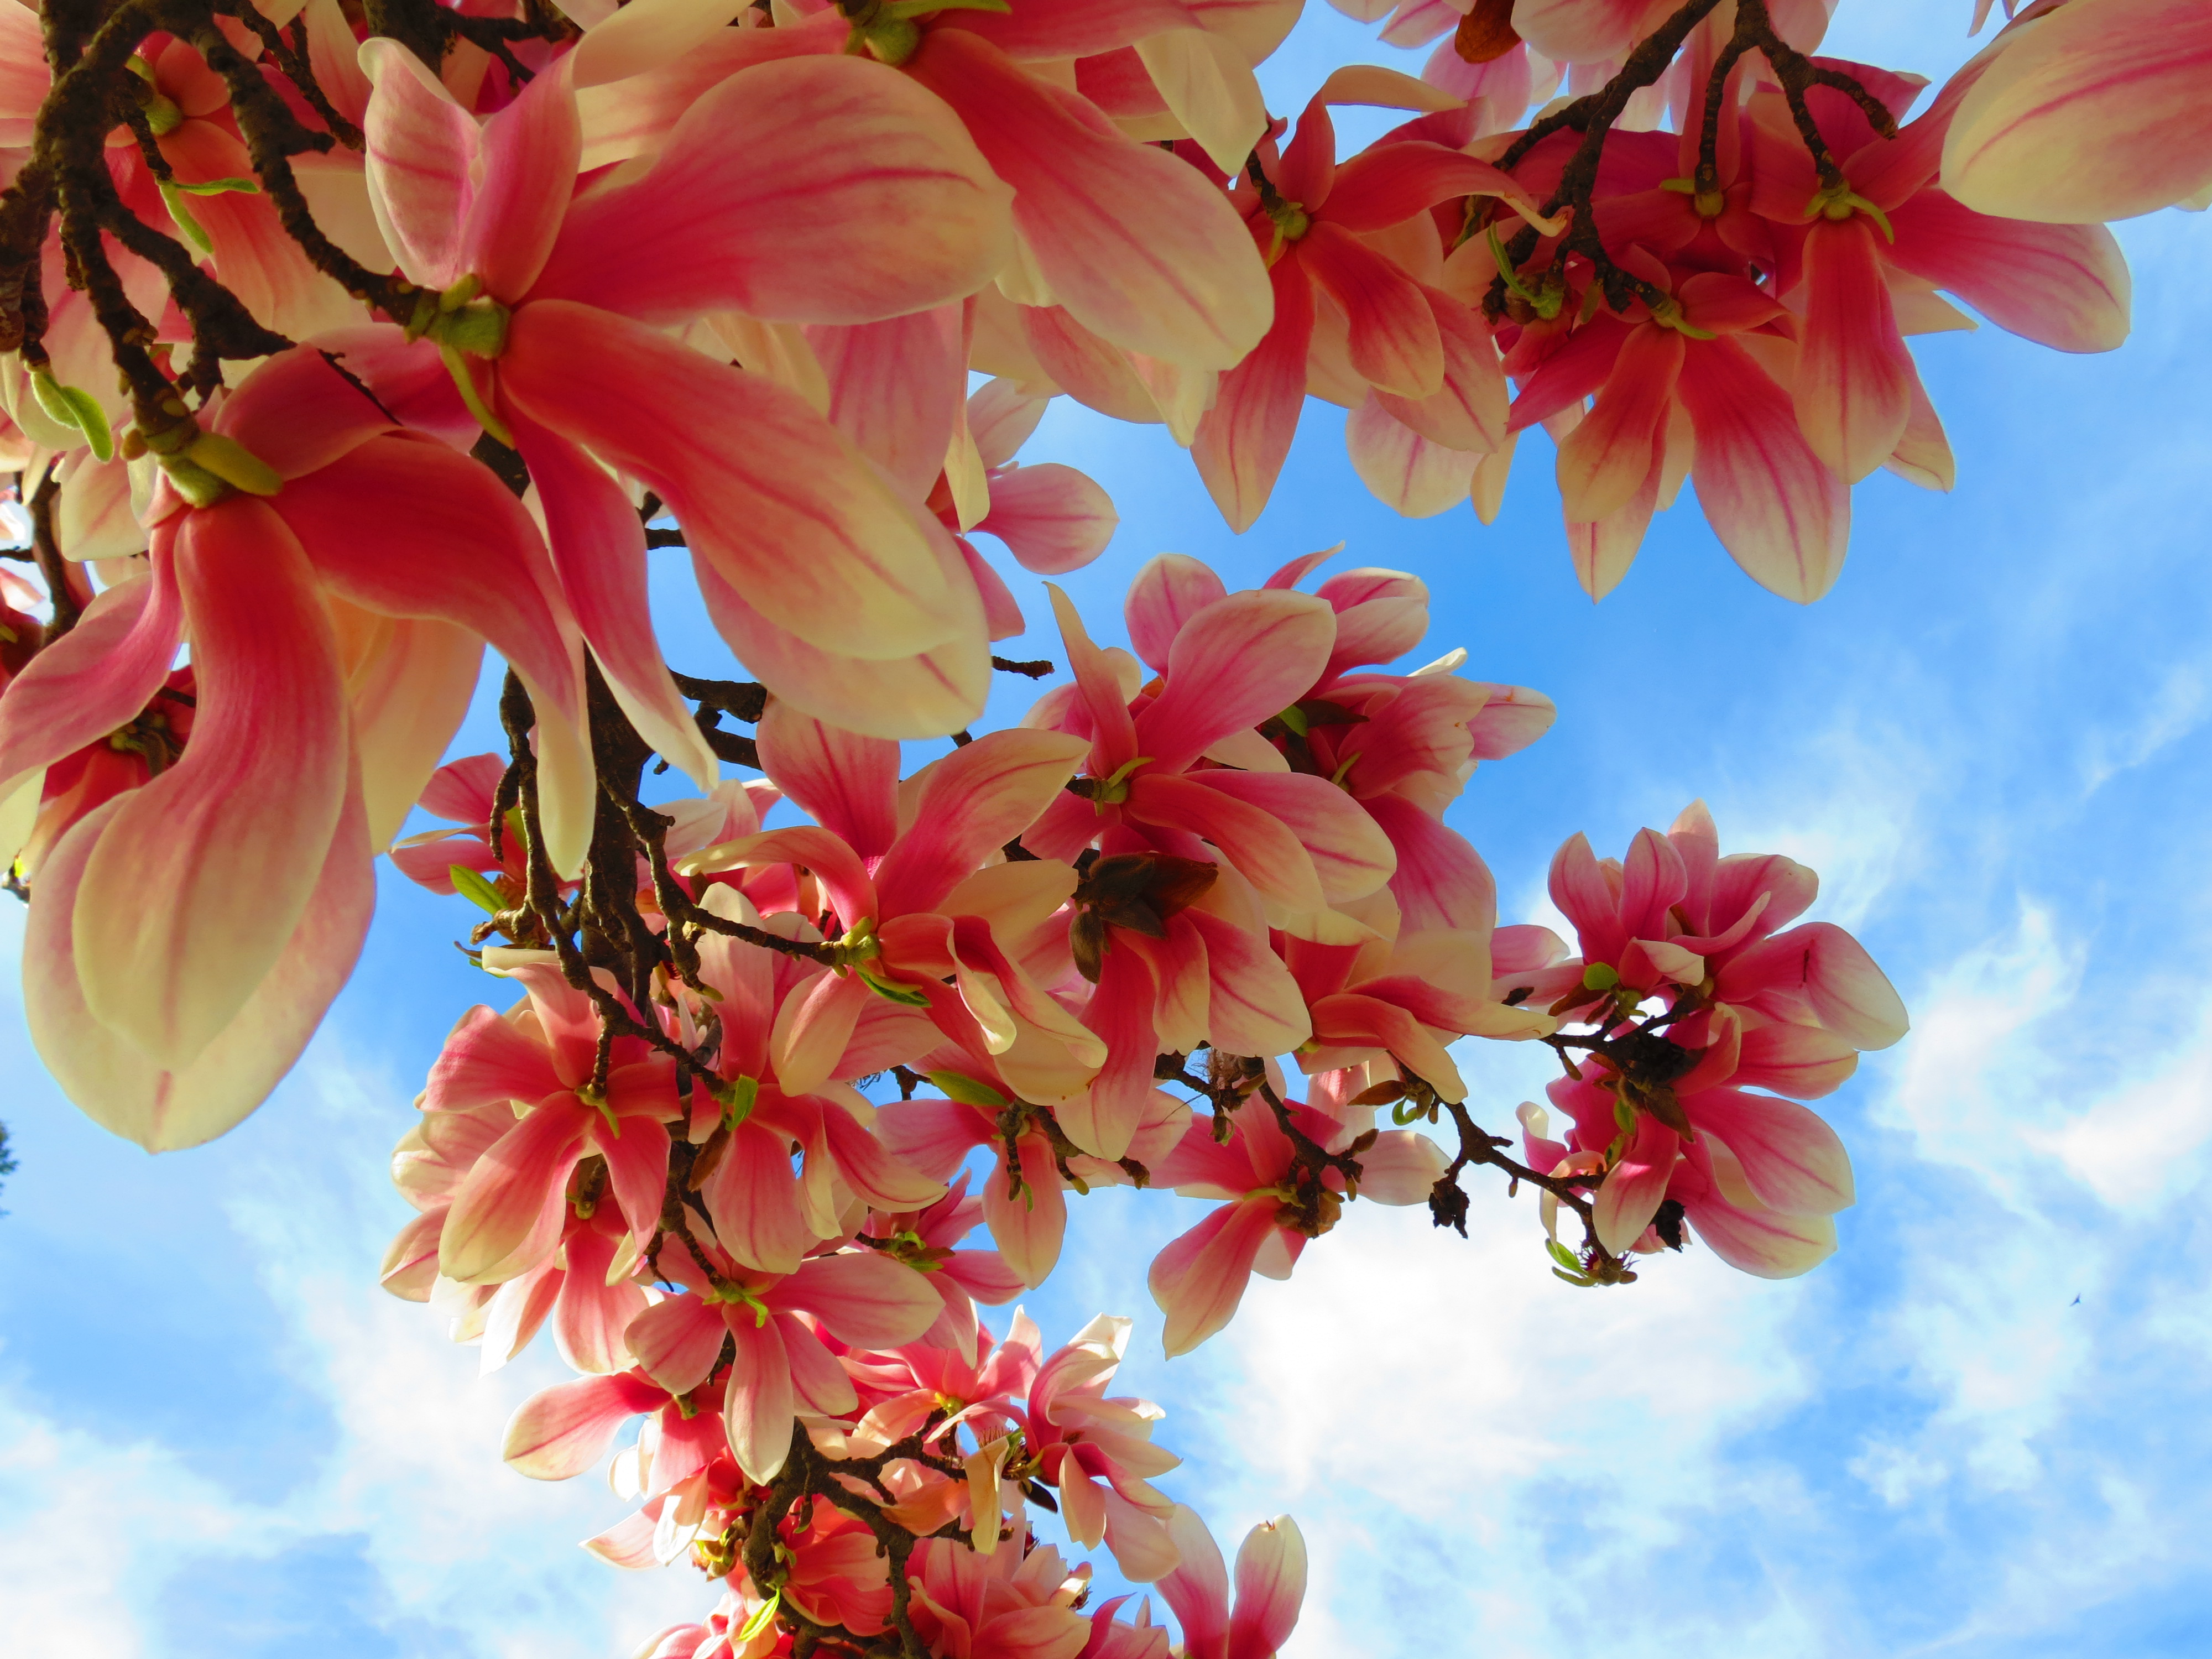 779314 descargar imagen tierra/naturaleza, rama, florecer, magnolia, rosa, árbol: fondos de pantalla y protectores de pantalla gratis